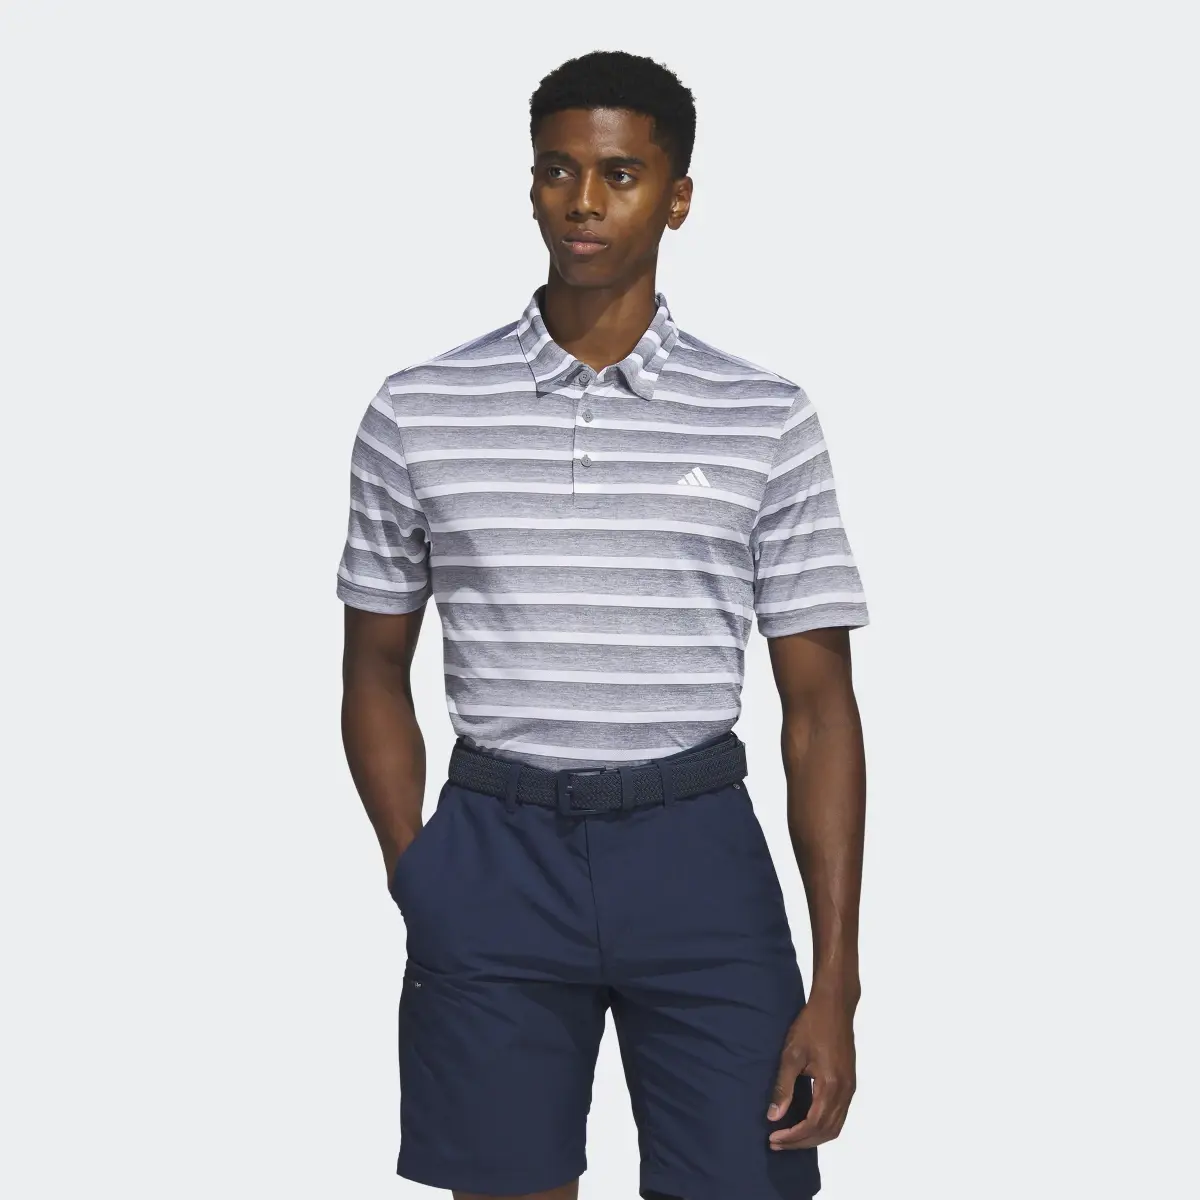 Adidas Two-Color Striped Golf Polo Shirt. 2